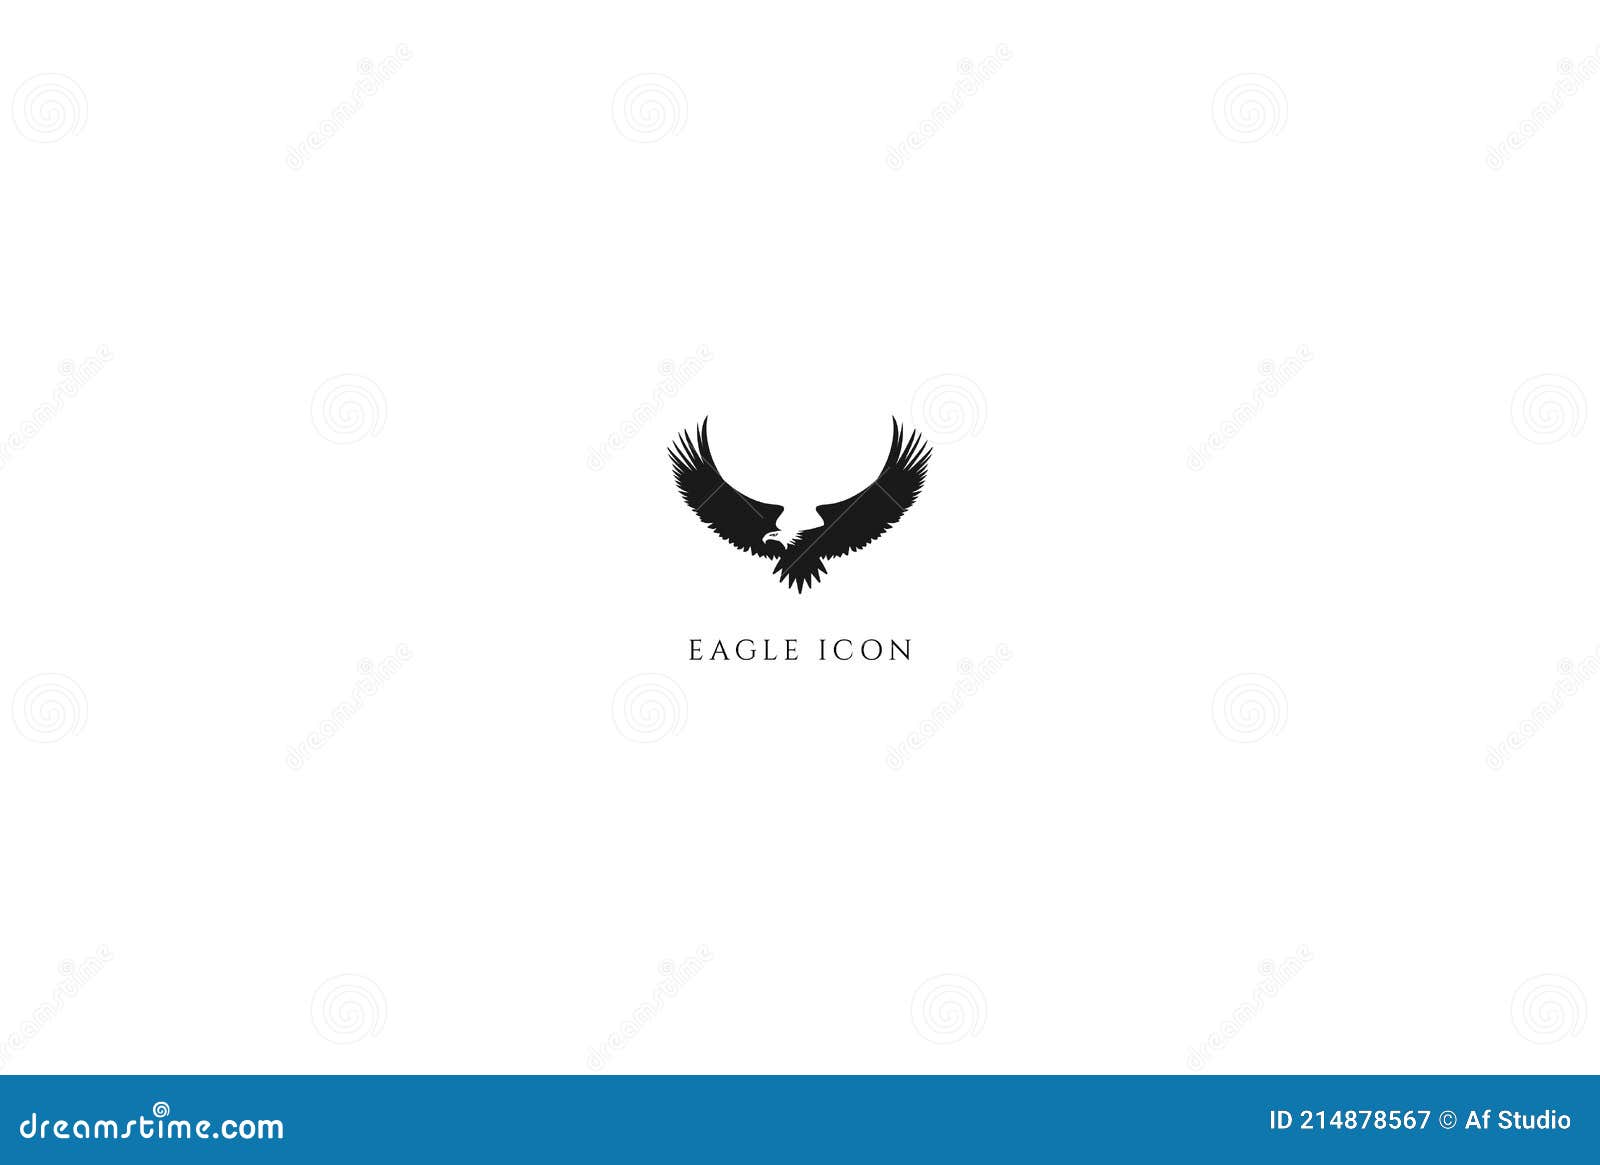 Simple Minimalist Flying Eagle Falcon Hawk Logo Design Vector Stock Vector   Illustration of flying freedom 214878567